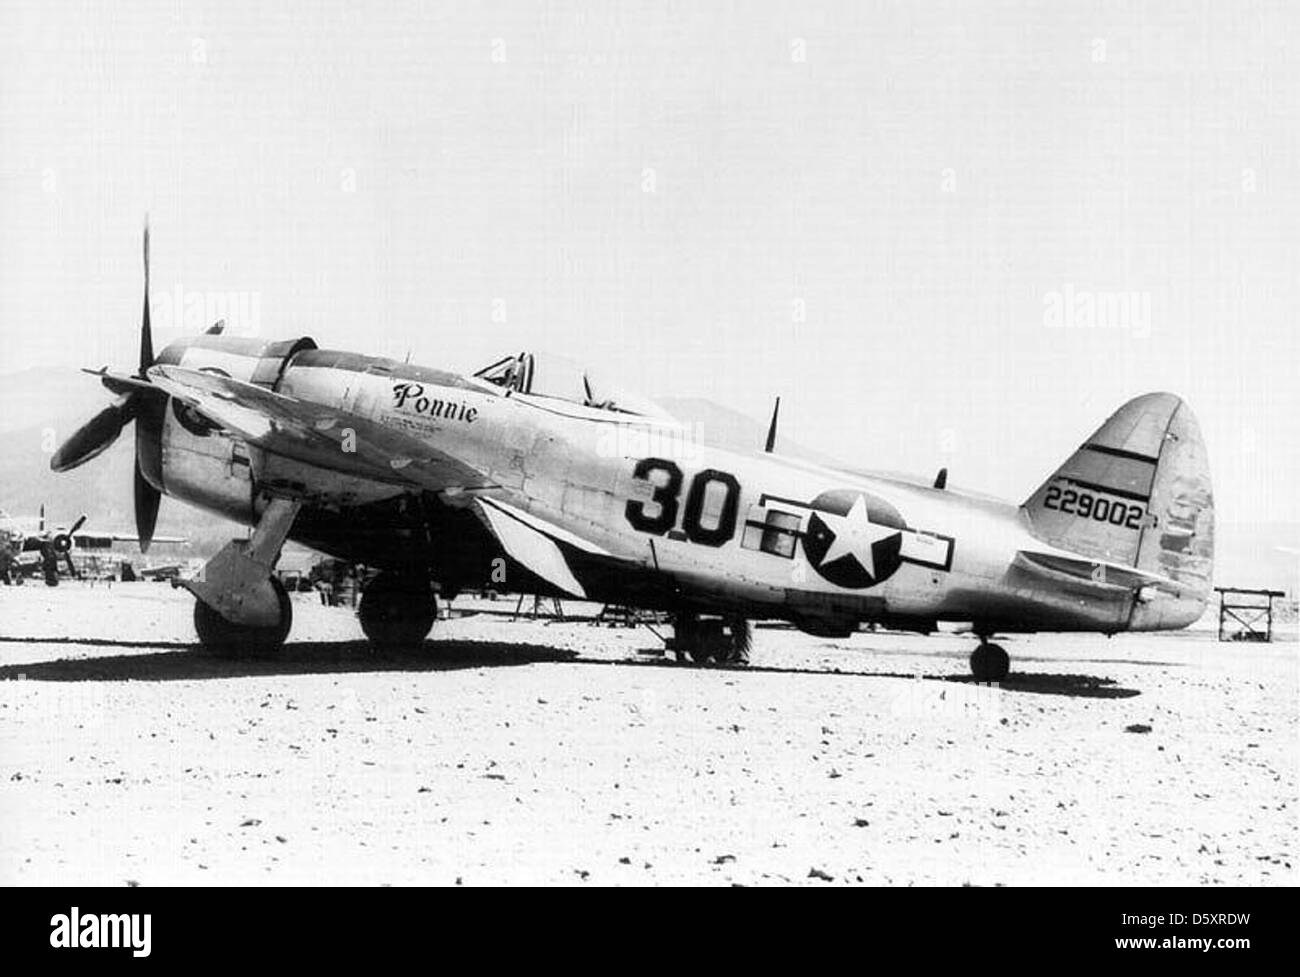 Republic P-47D-28-RA "Thunderbolt" "Ponnie" of the 57th FG, Italy, 1944. Stock Photo